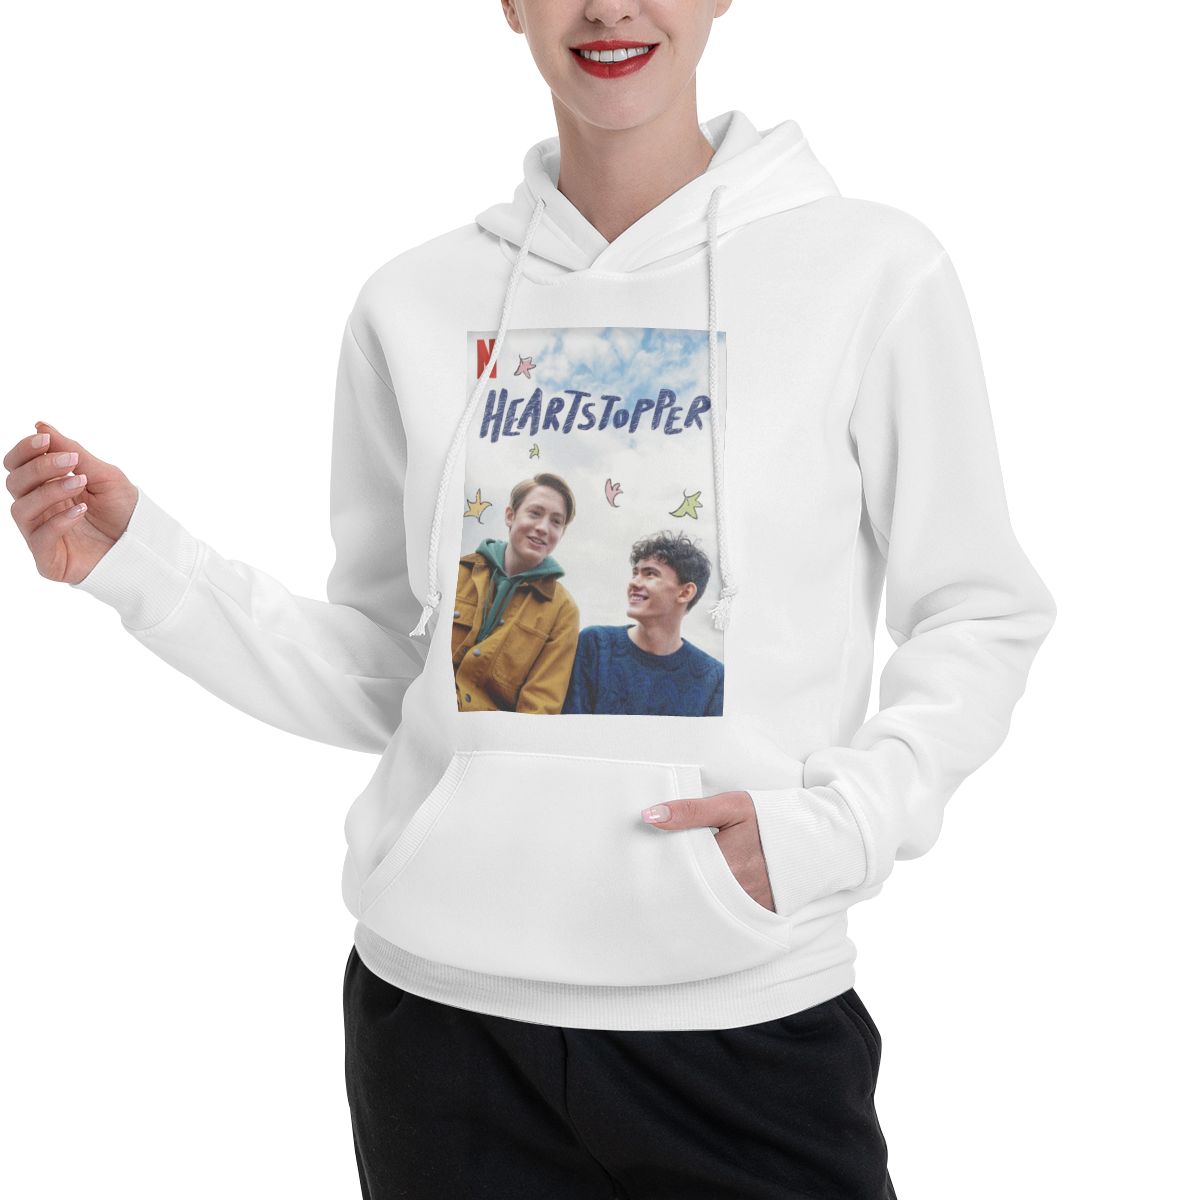 Men's Sweatshirt Heartstopper Nick Charlie Lgbt Pride 100% Cotton Printing Couple Thin Fleece Sweatshirt  Hoodie Hoodie Shirt